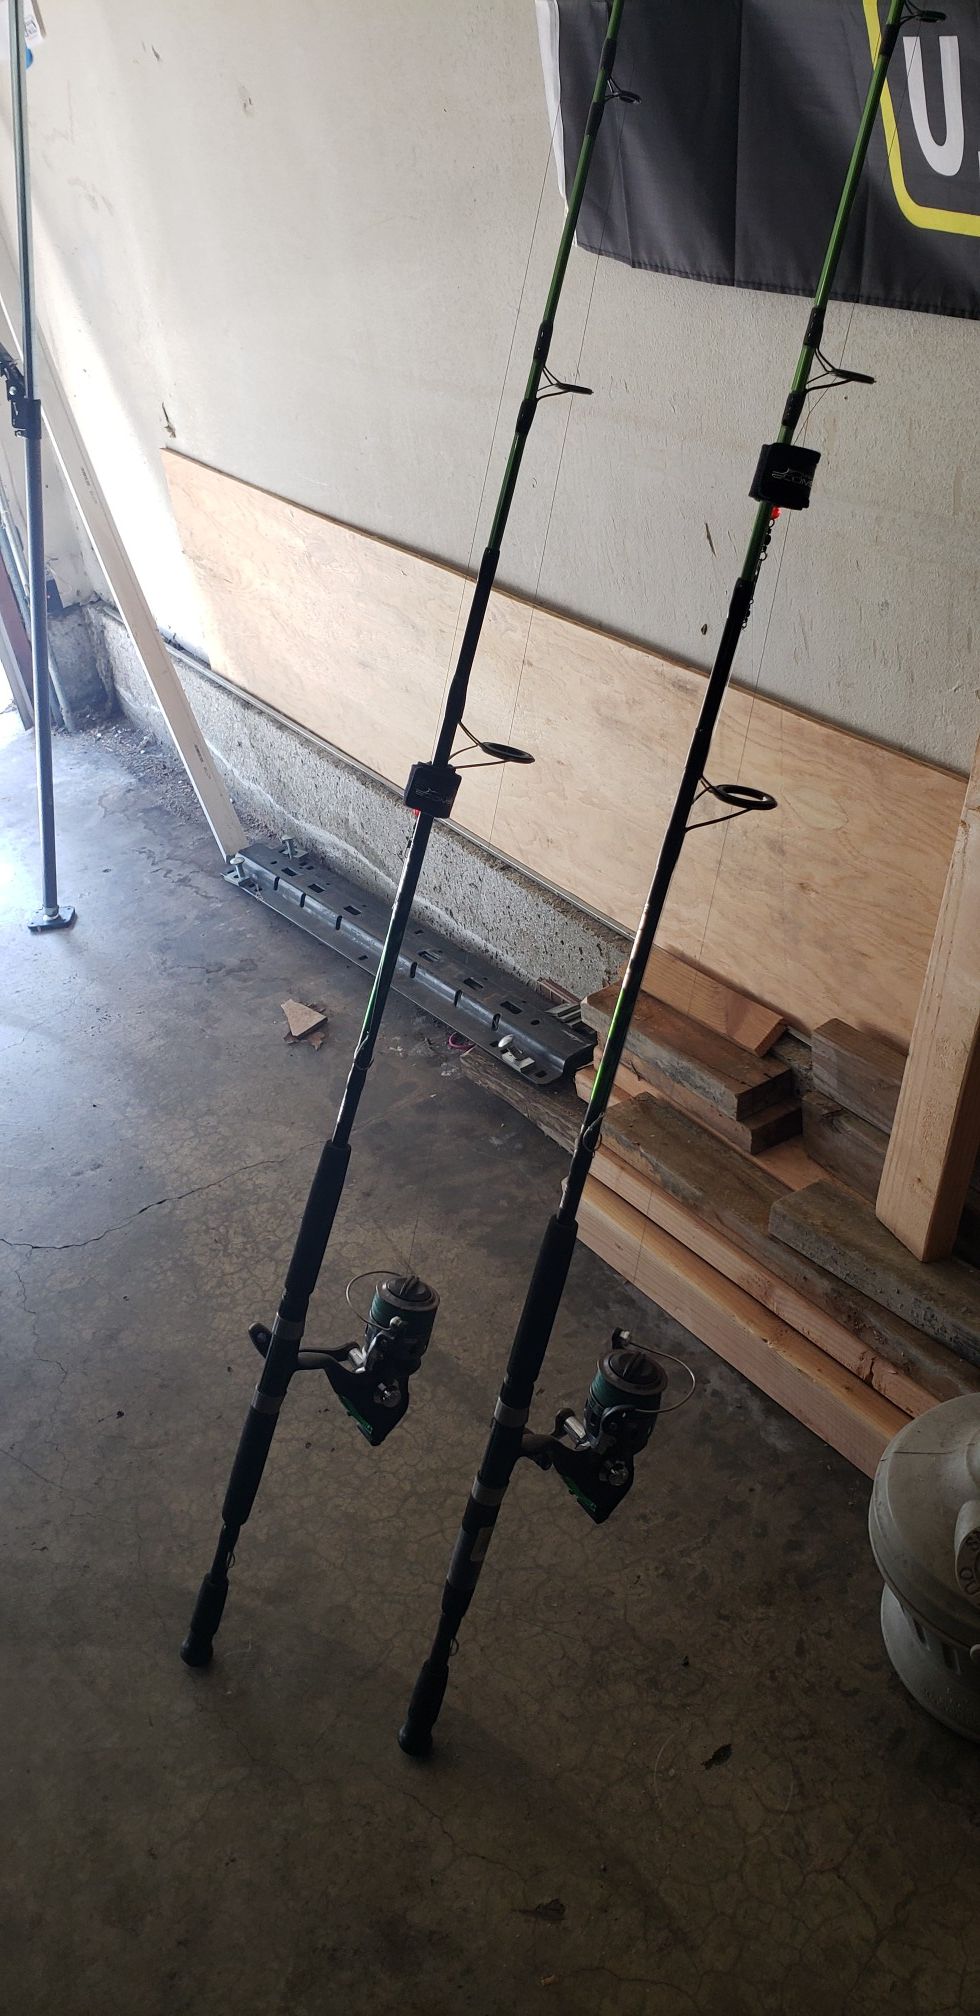 2 fishing poles with bite alarm